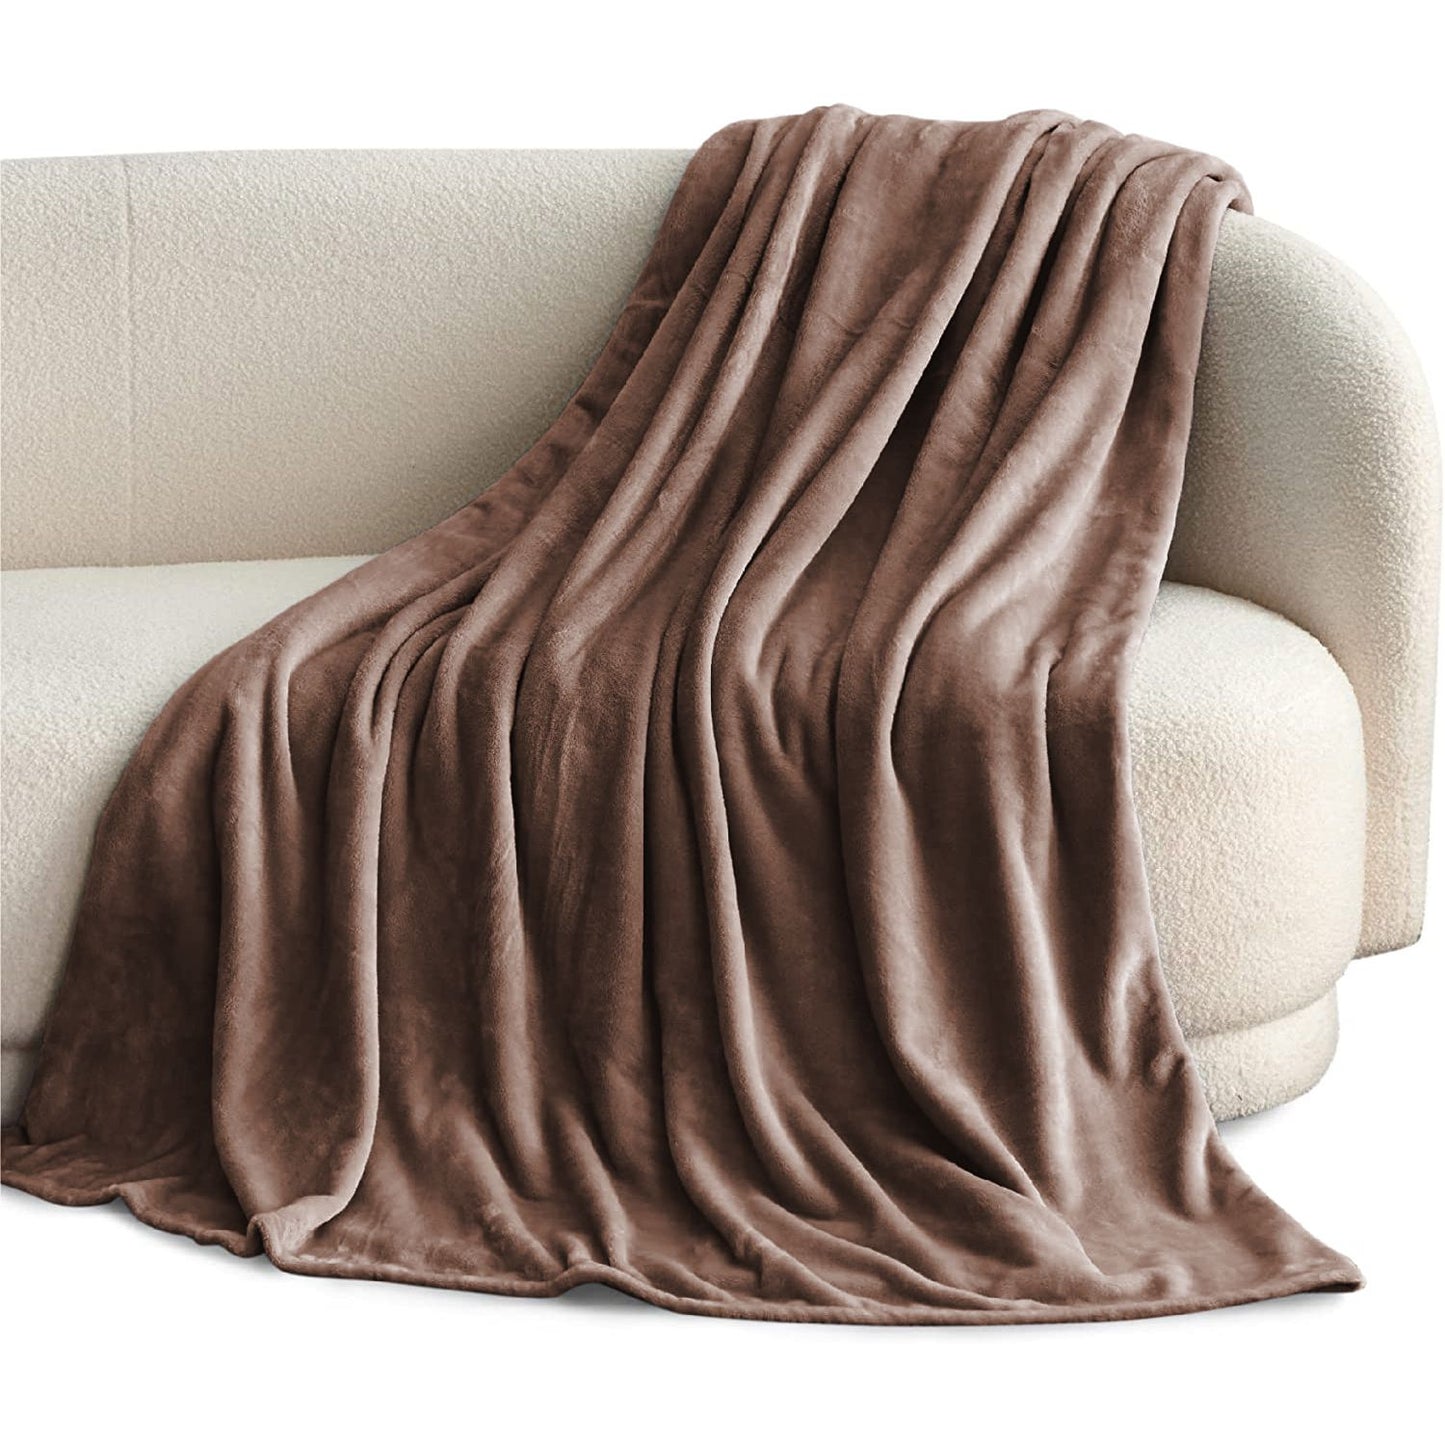 Fluffy Mink Fleece Throw Winter Blanket - Coffee